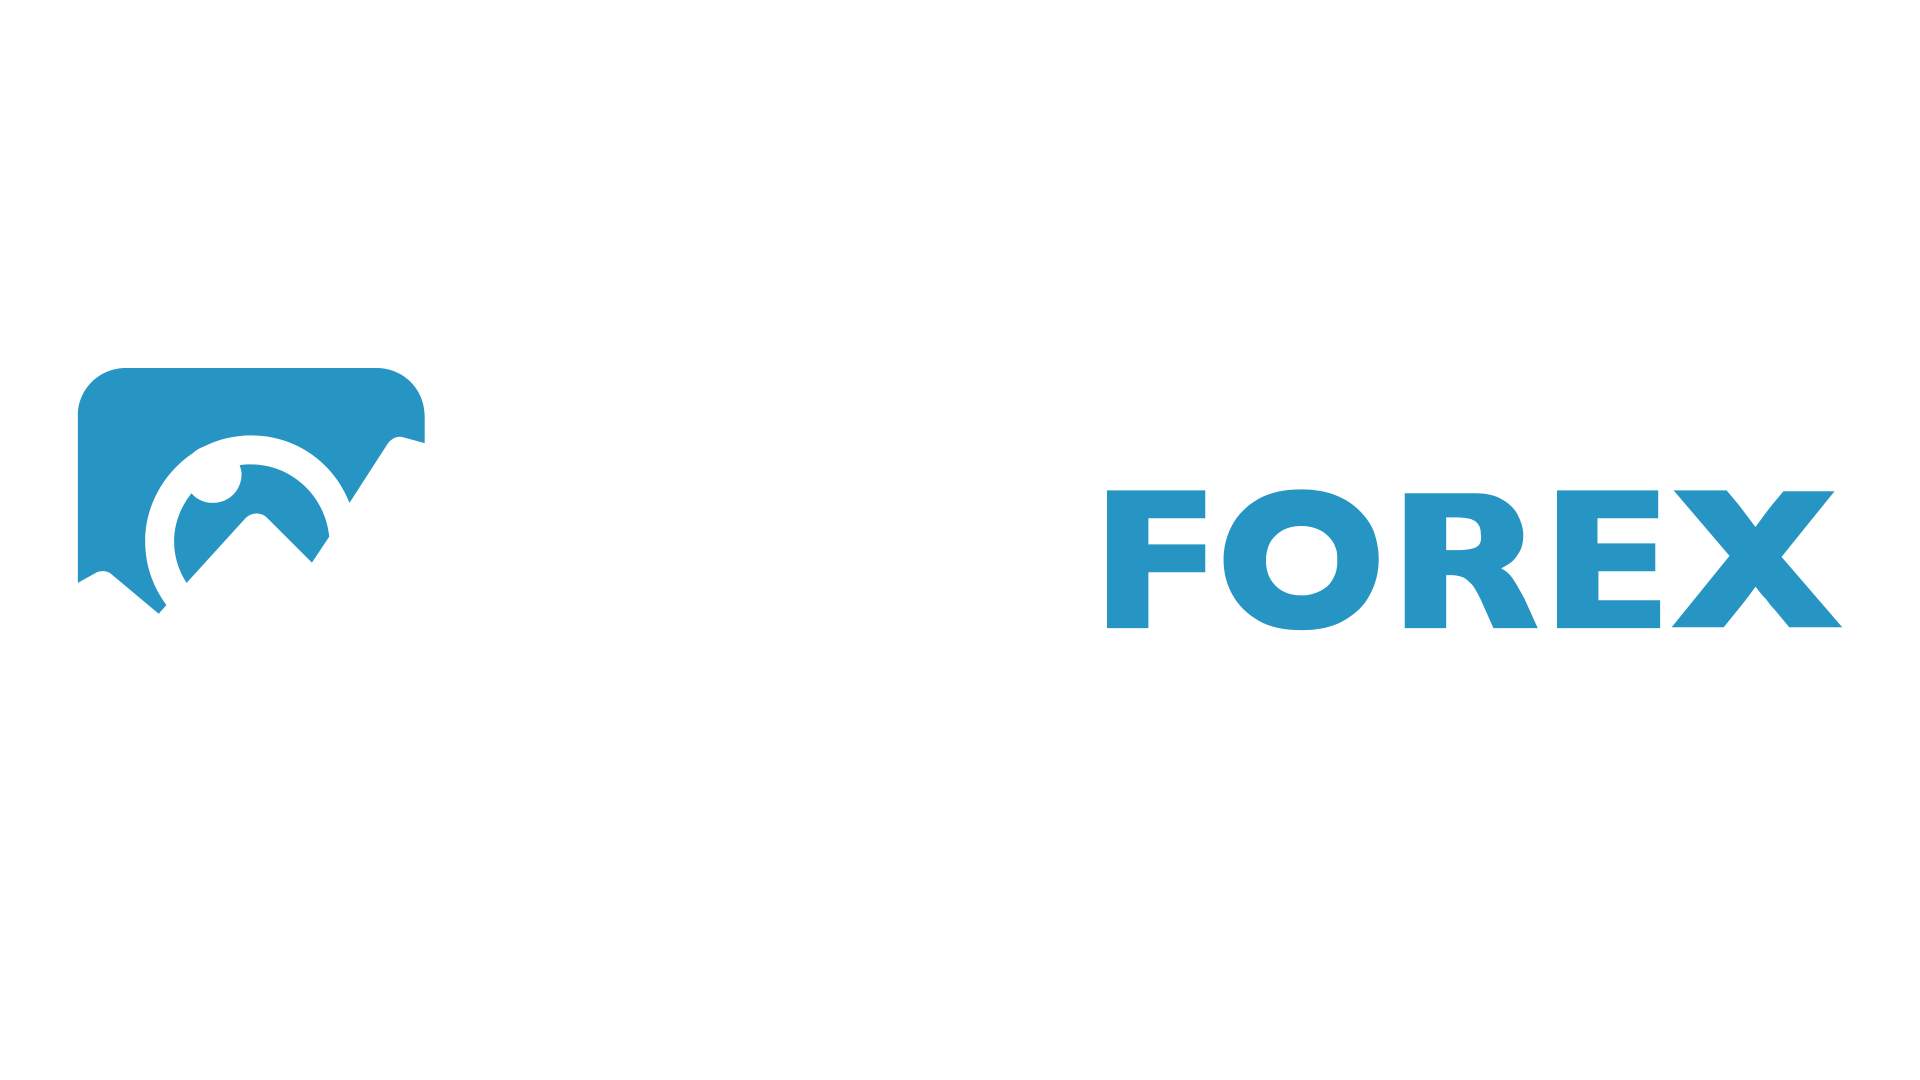 VideForex Review – Gimmicks don’t always work